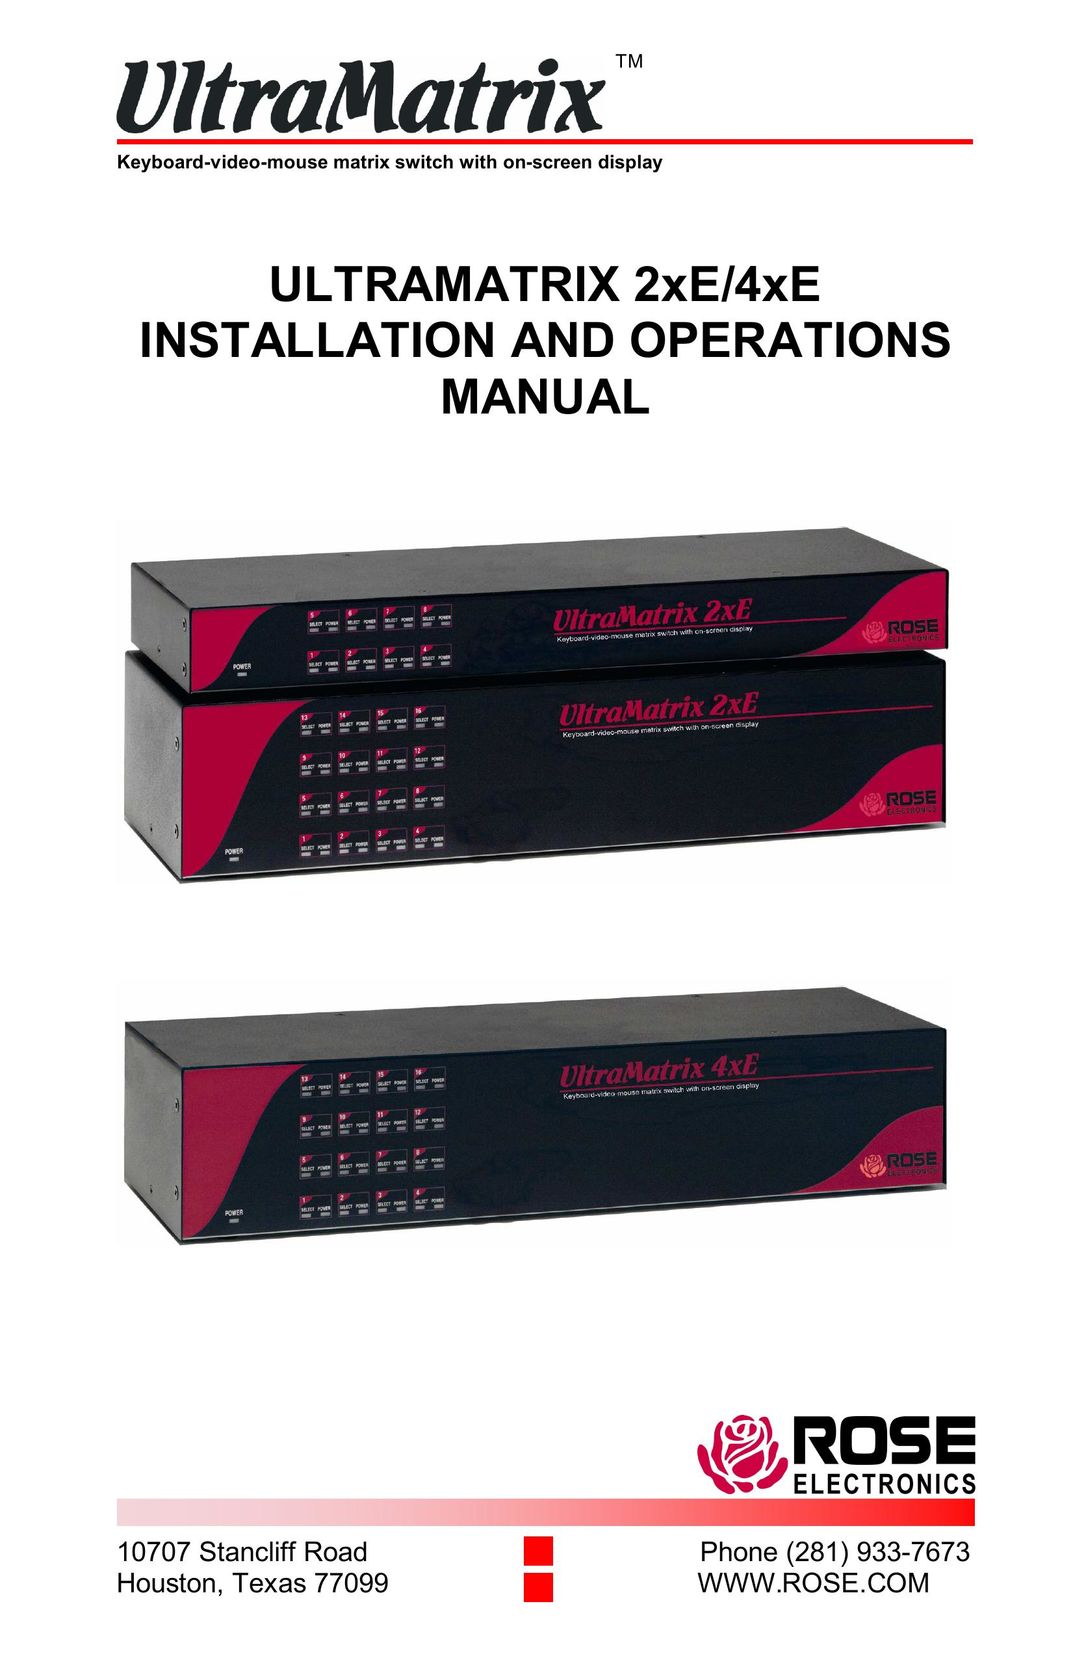 Rose electronic ULTRAMATRIX 4xE Switch User Manual